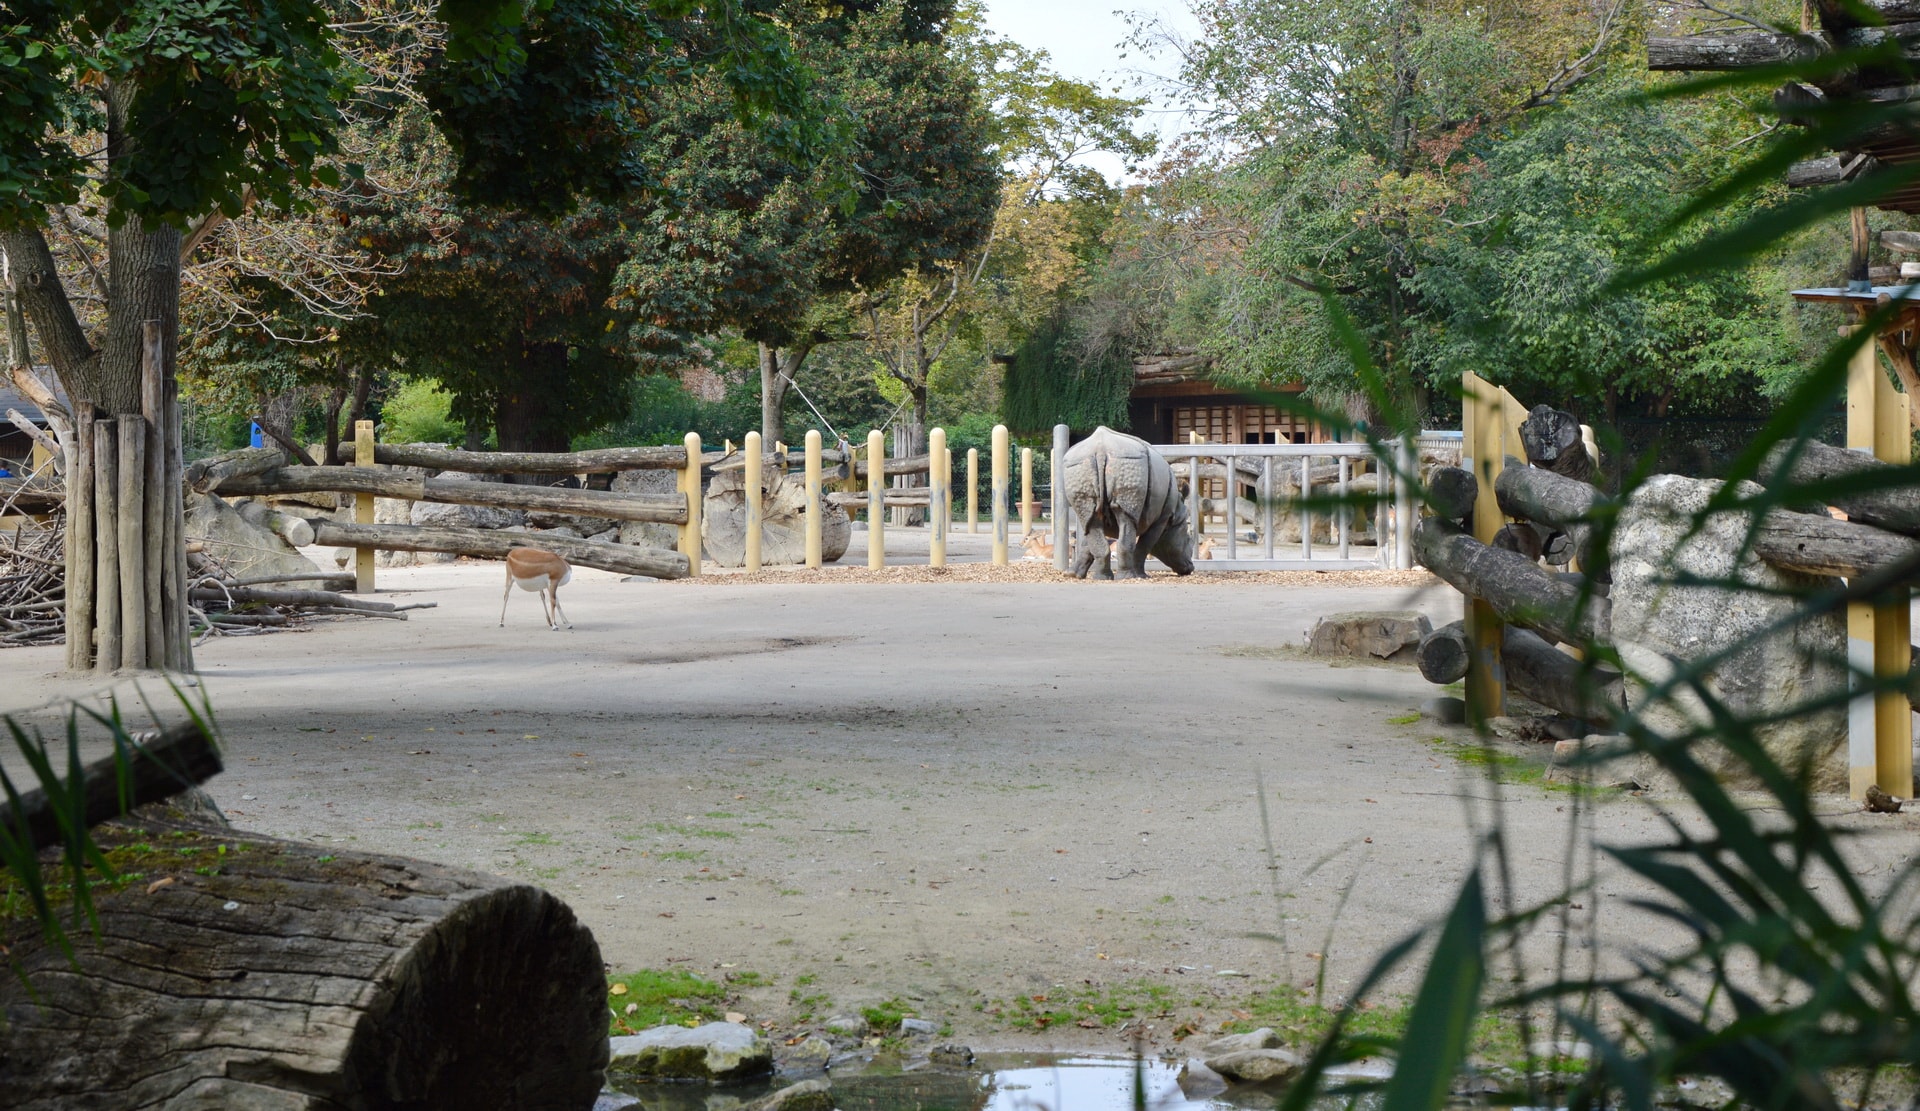 You can also visit the Schönbrunn Zoo